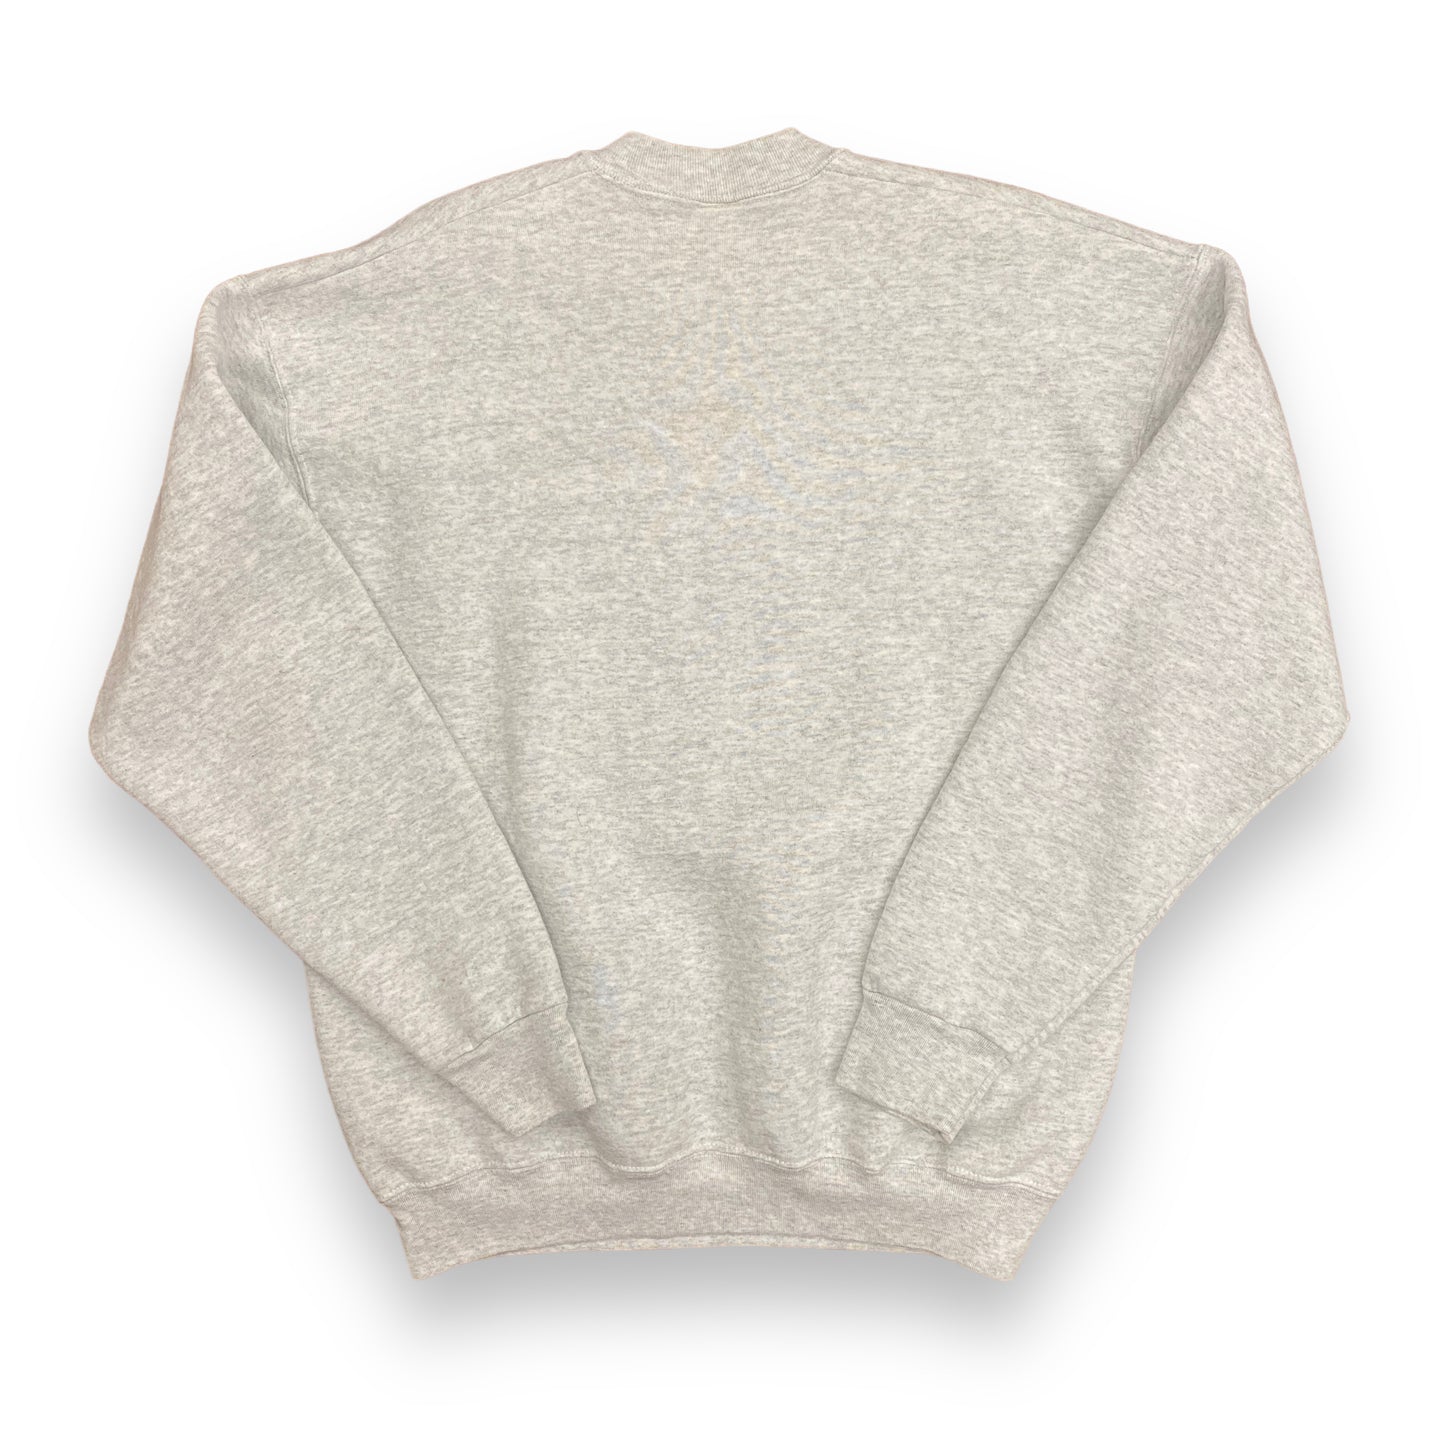 1990s "Eat, Sleep, Fish" Crewneck Sweatshirt - Size XL